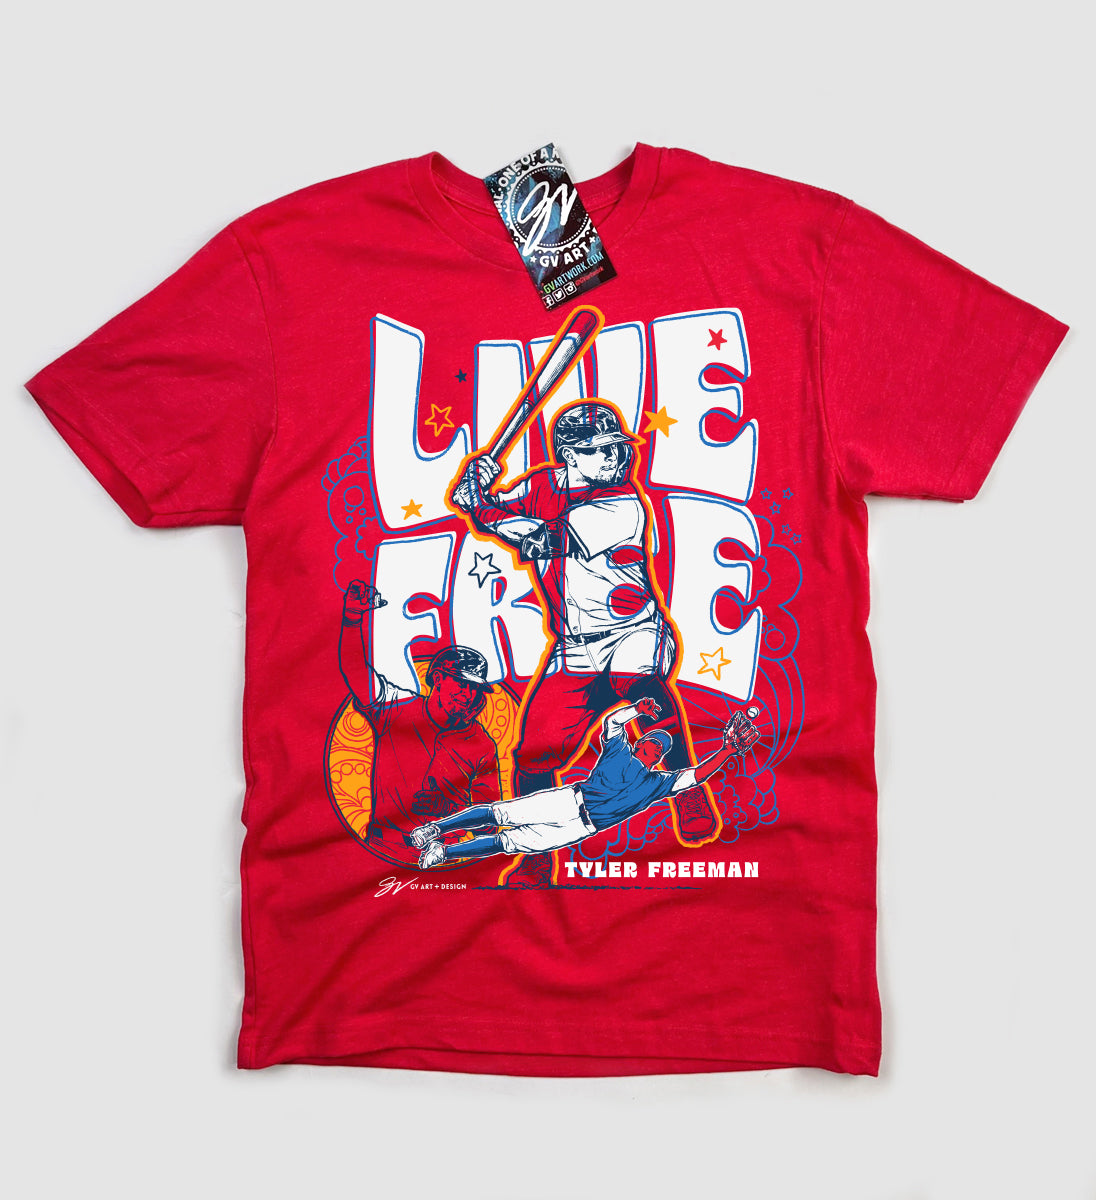 Tyler Freeman "Live Free" T shirt